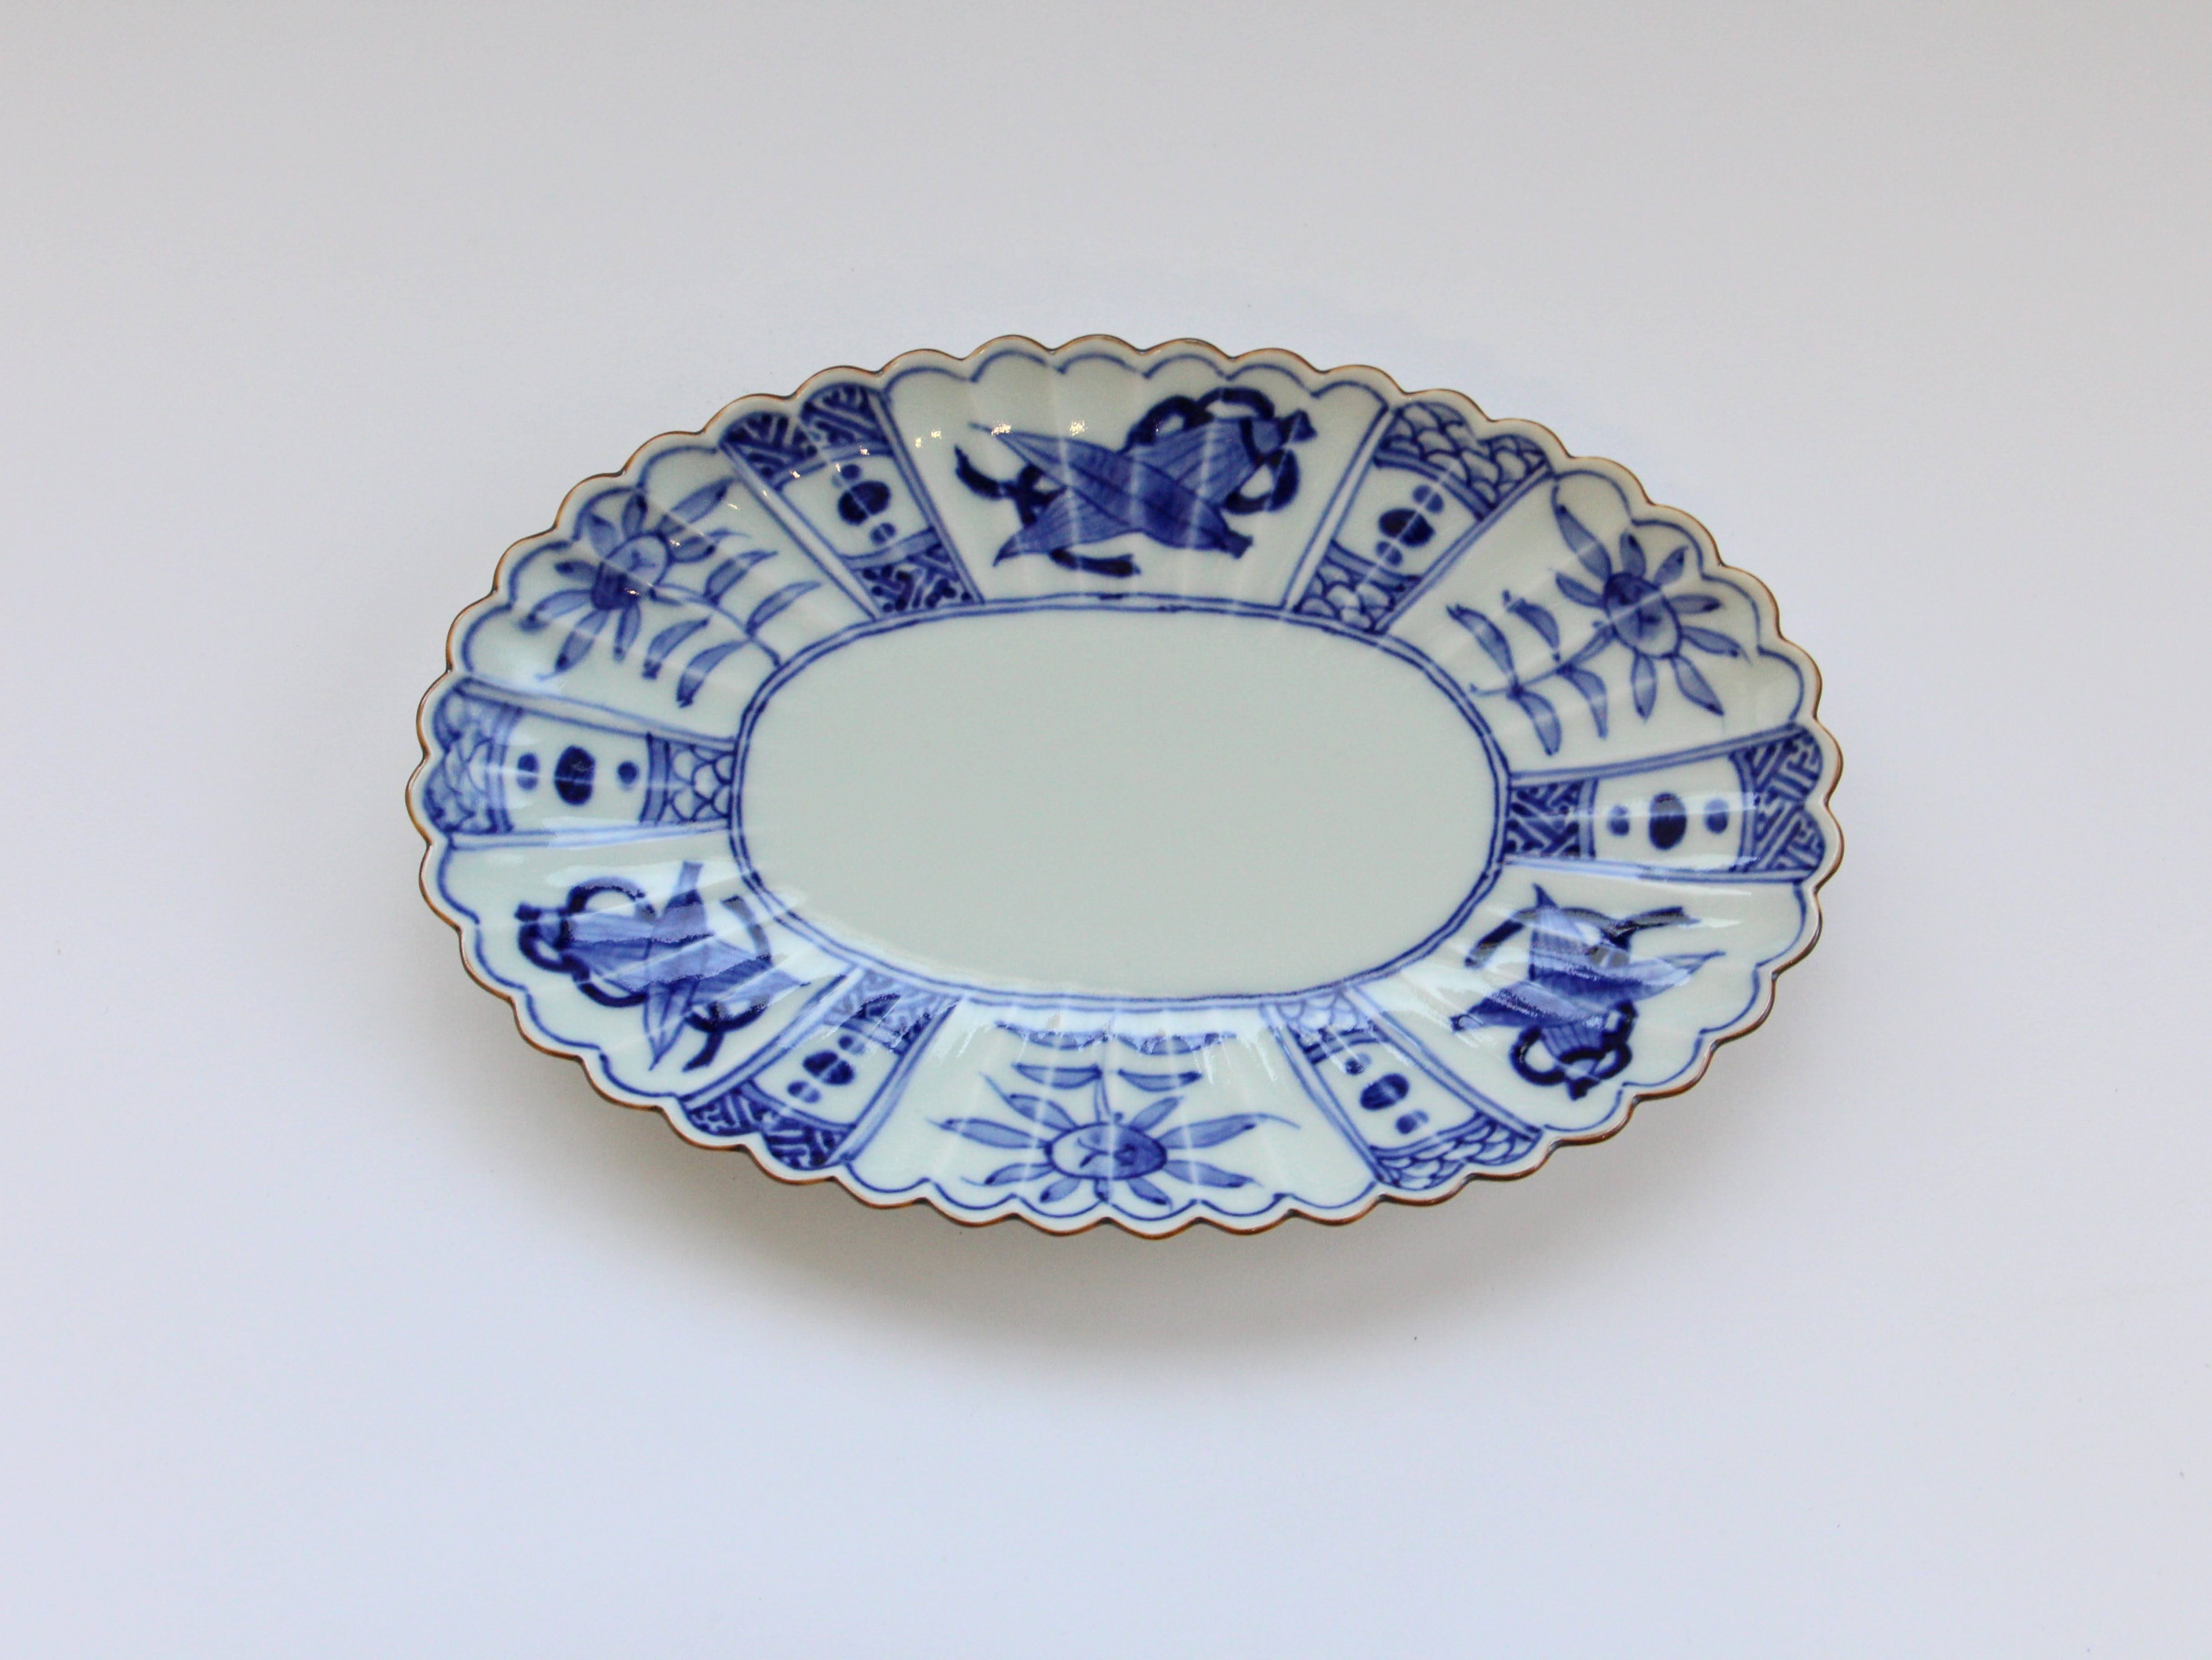 Fuchisabi Fuyo hand oval plate [Ken Kaji porcelain]